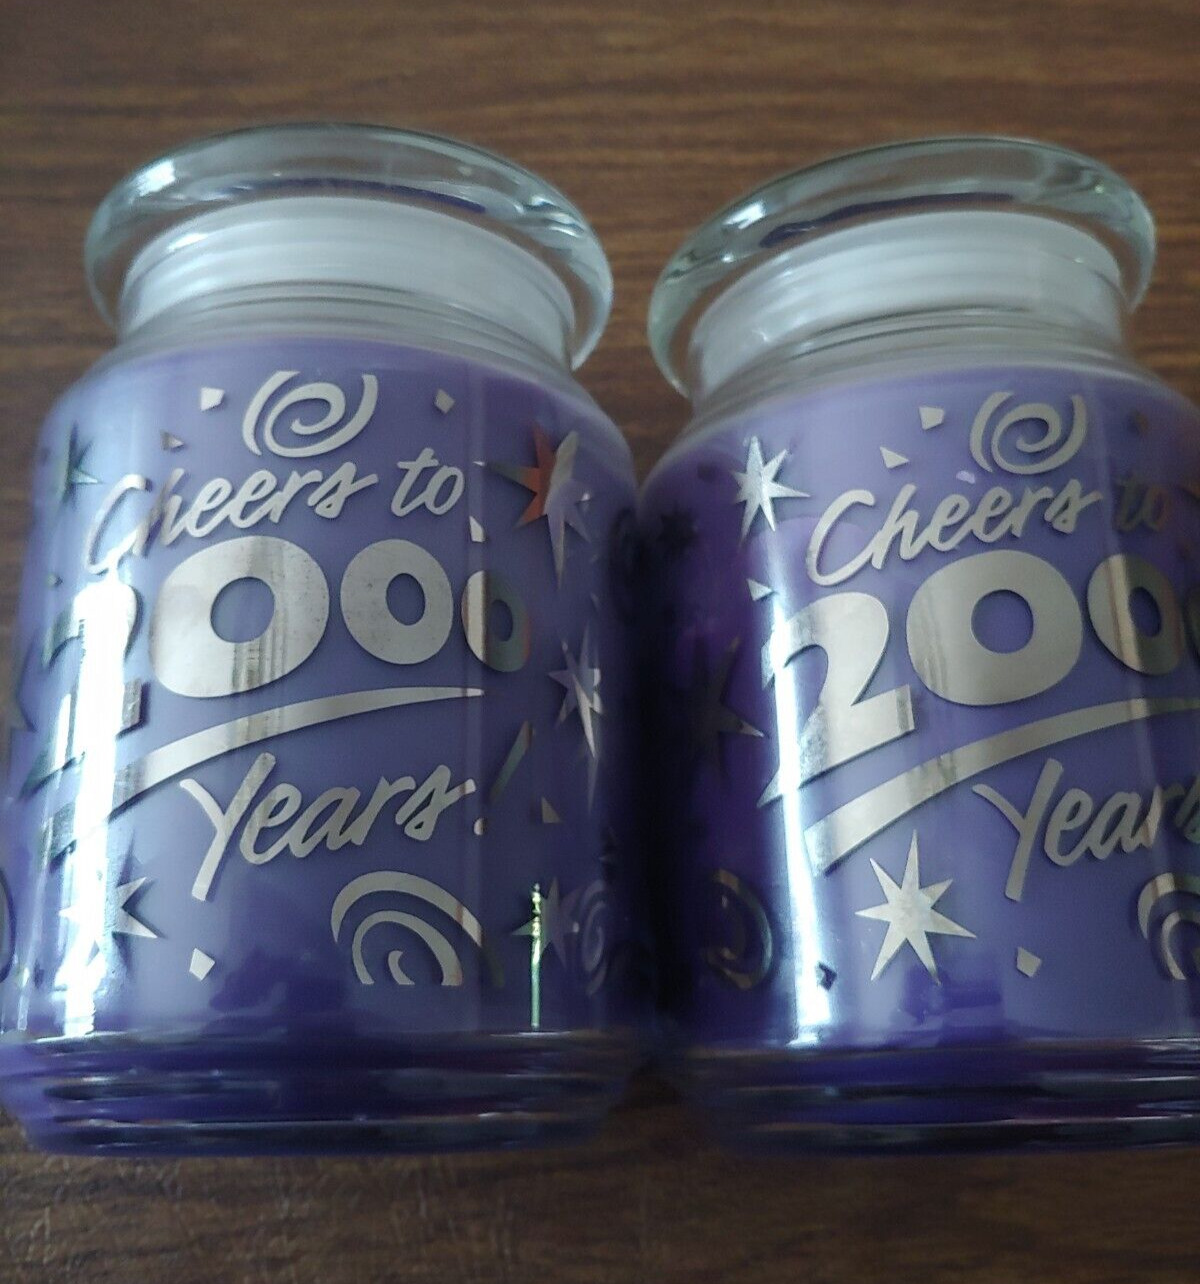 Lot of 2 American Greetings New Milenium Cheers to 2000 Years Jar Candles